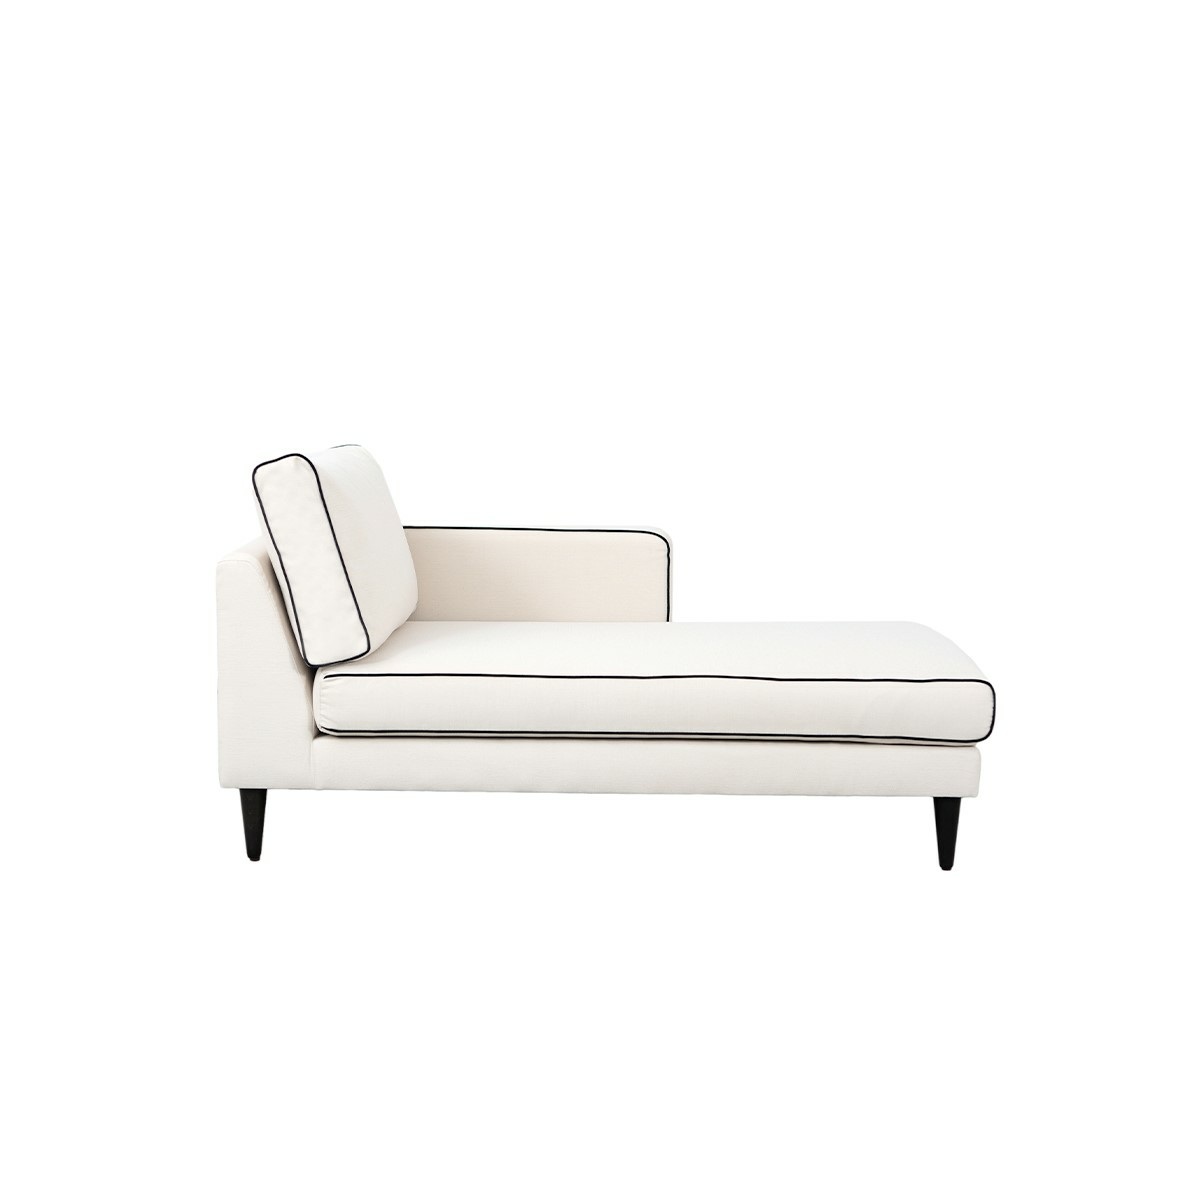 Noa sofa - Right armrest, Different Sizes - Cotton - image 4